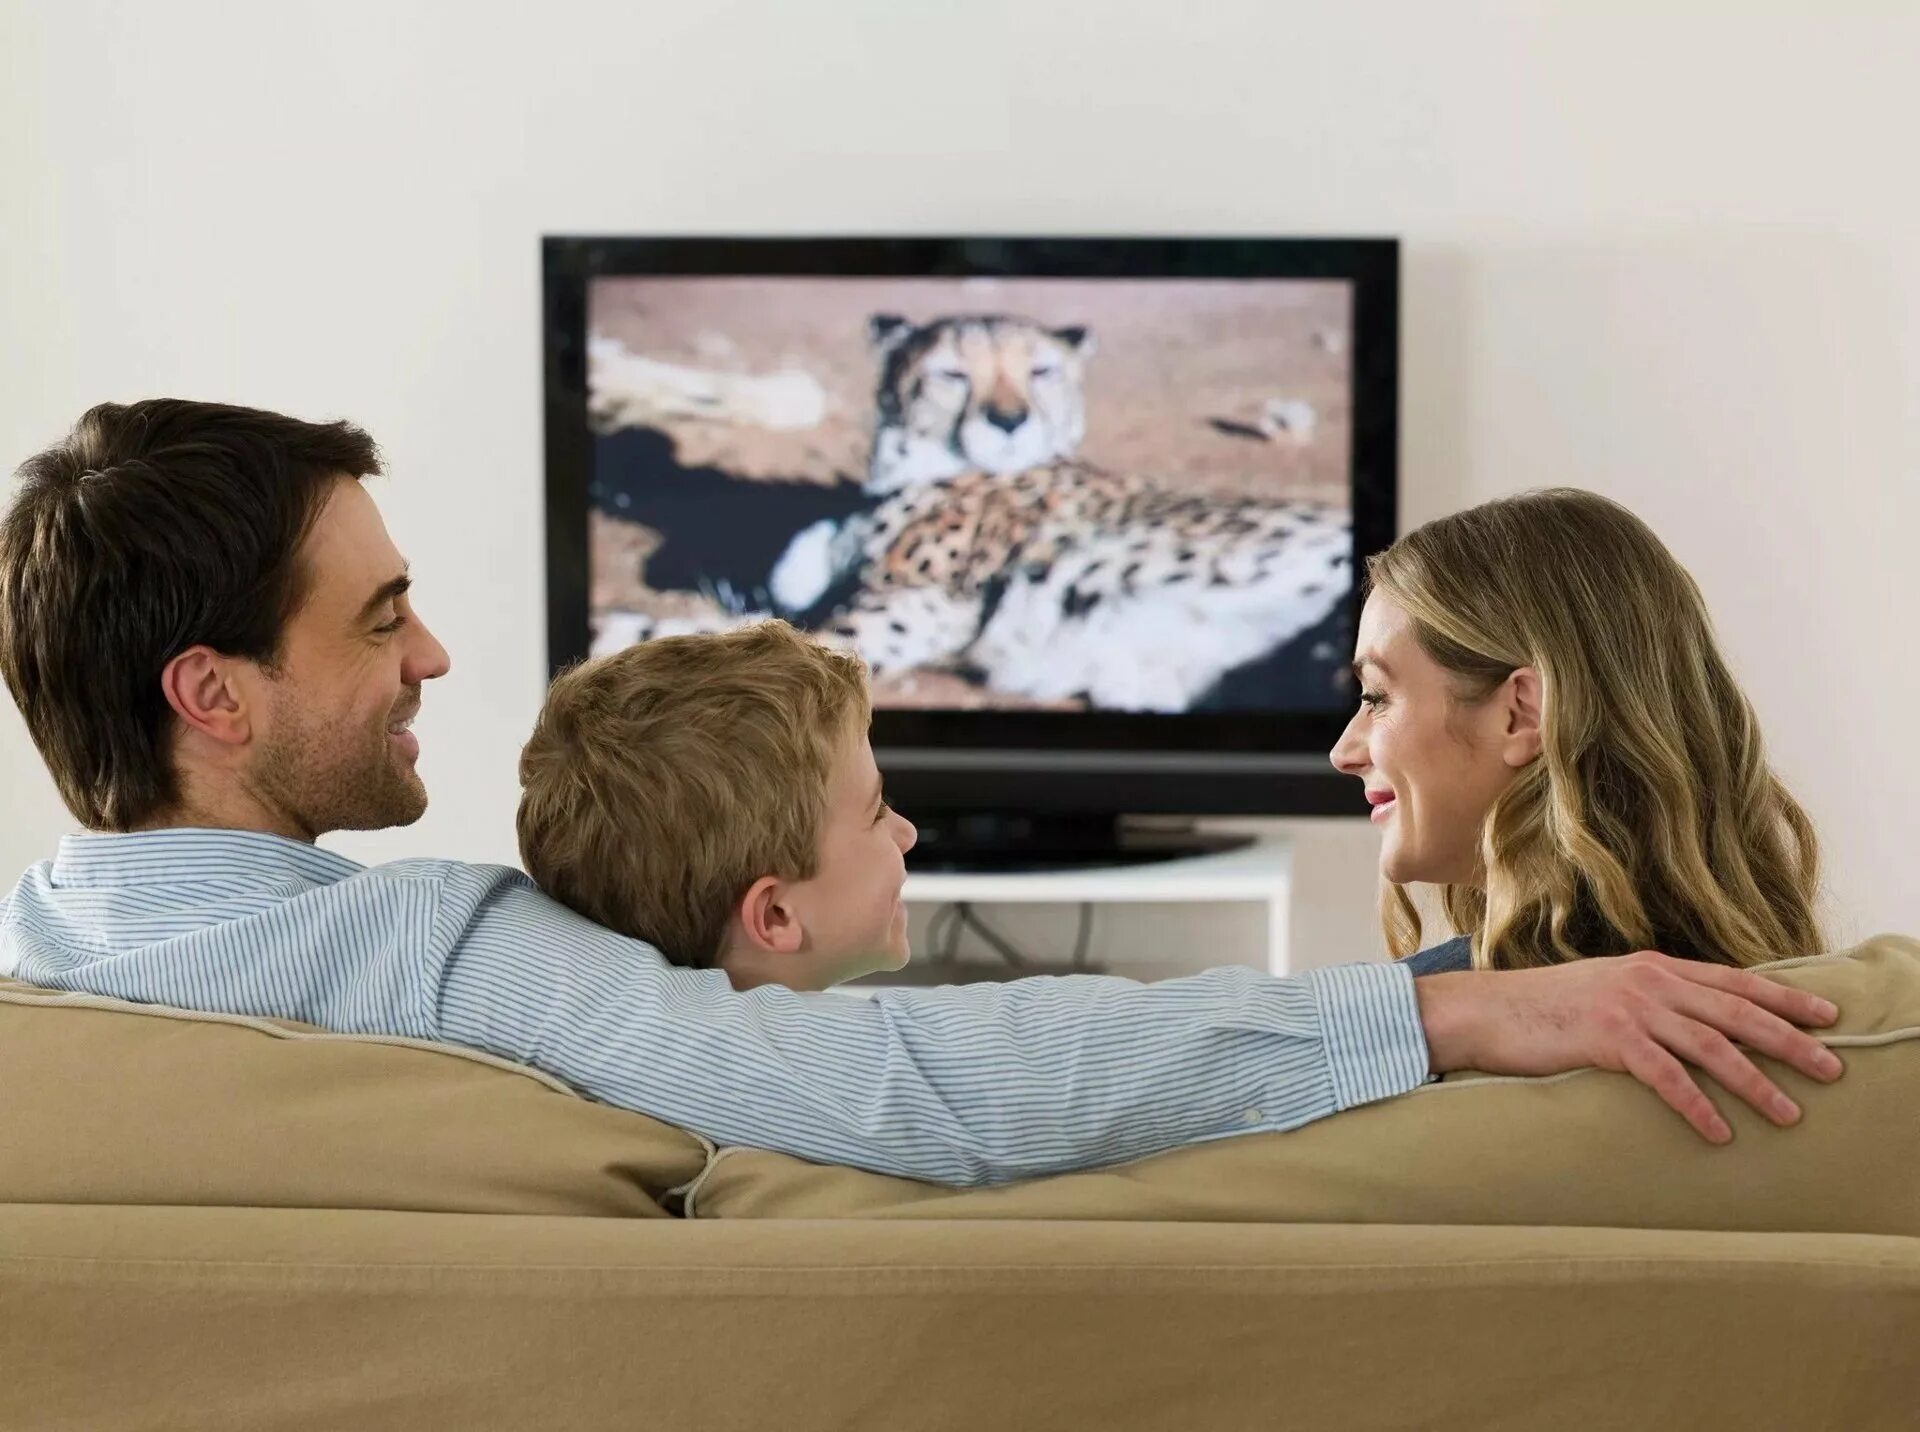 Видео просмотра телевизора. Семья у телевизора. Человек телевизор. Семья возле телевизора. Семья перед Телеком.